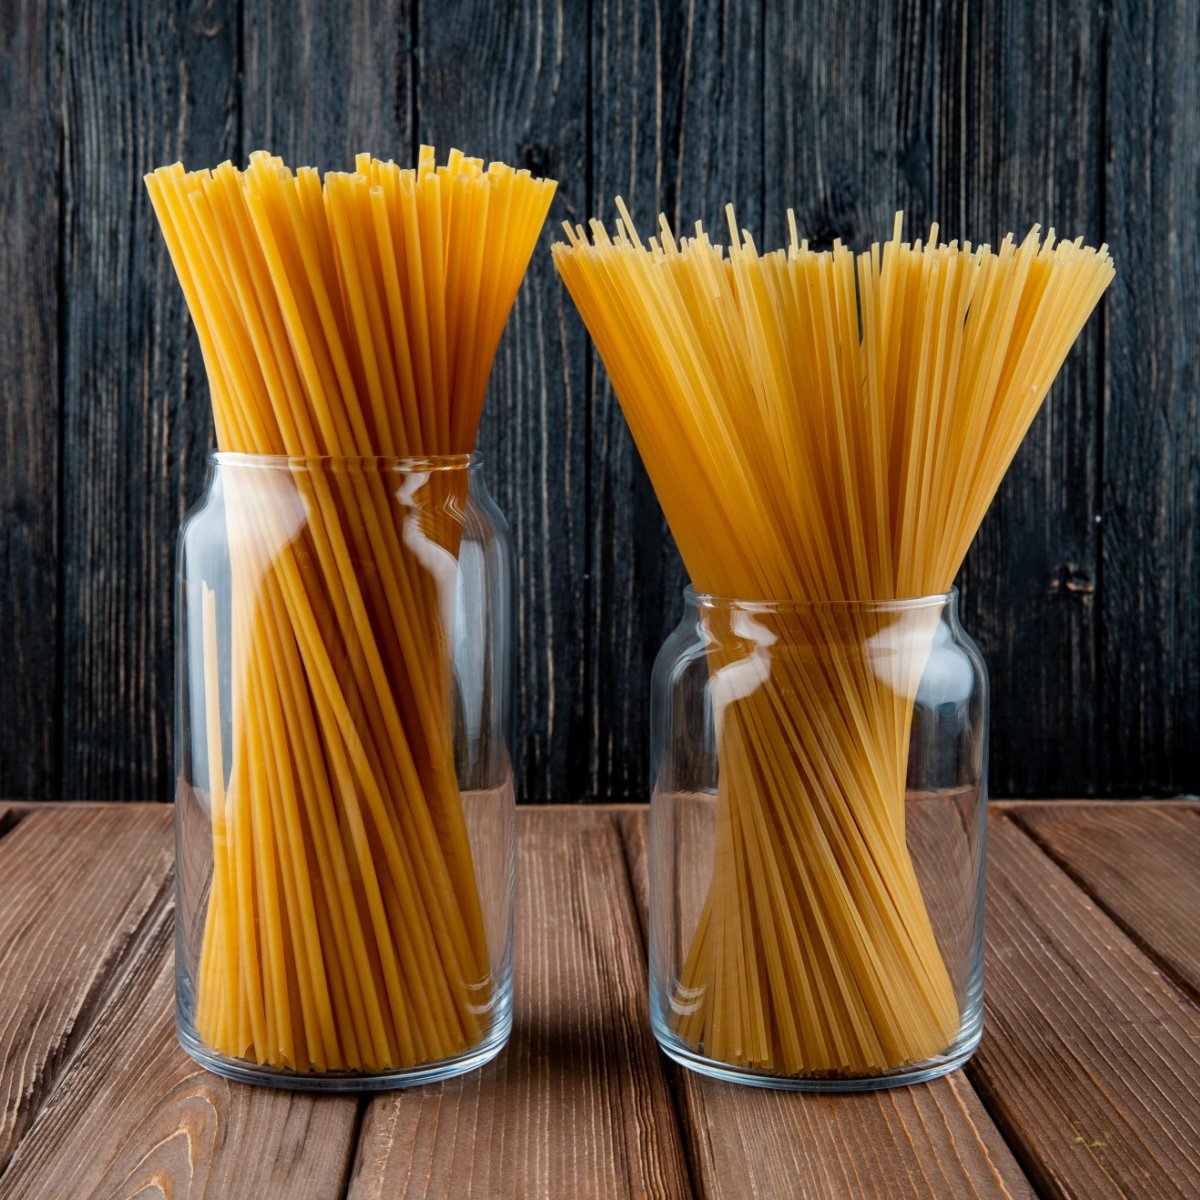 bucatini vs spaghetti